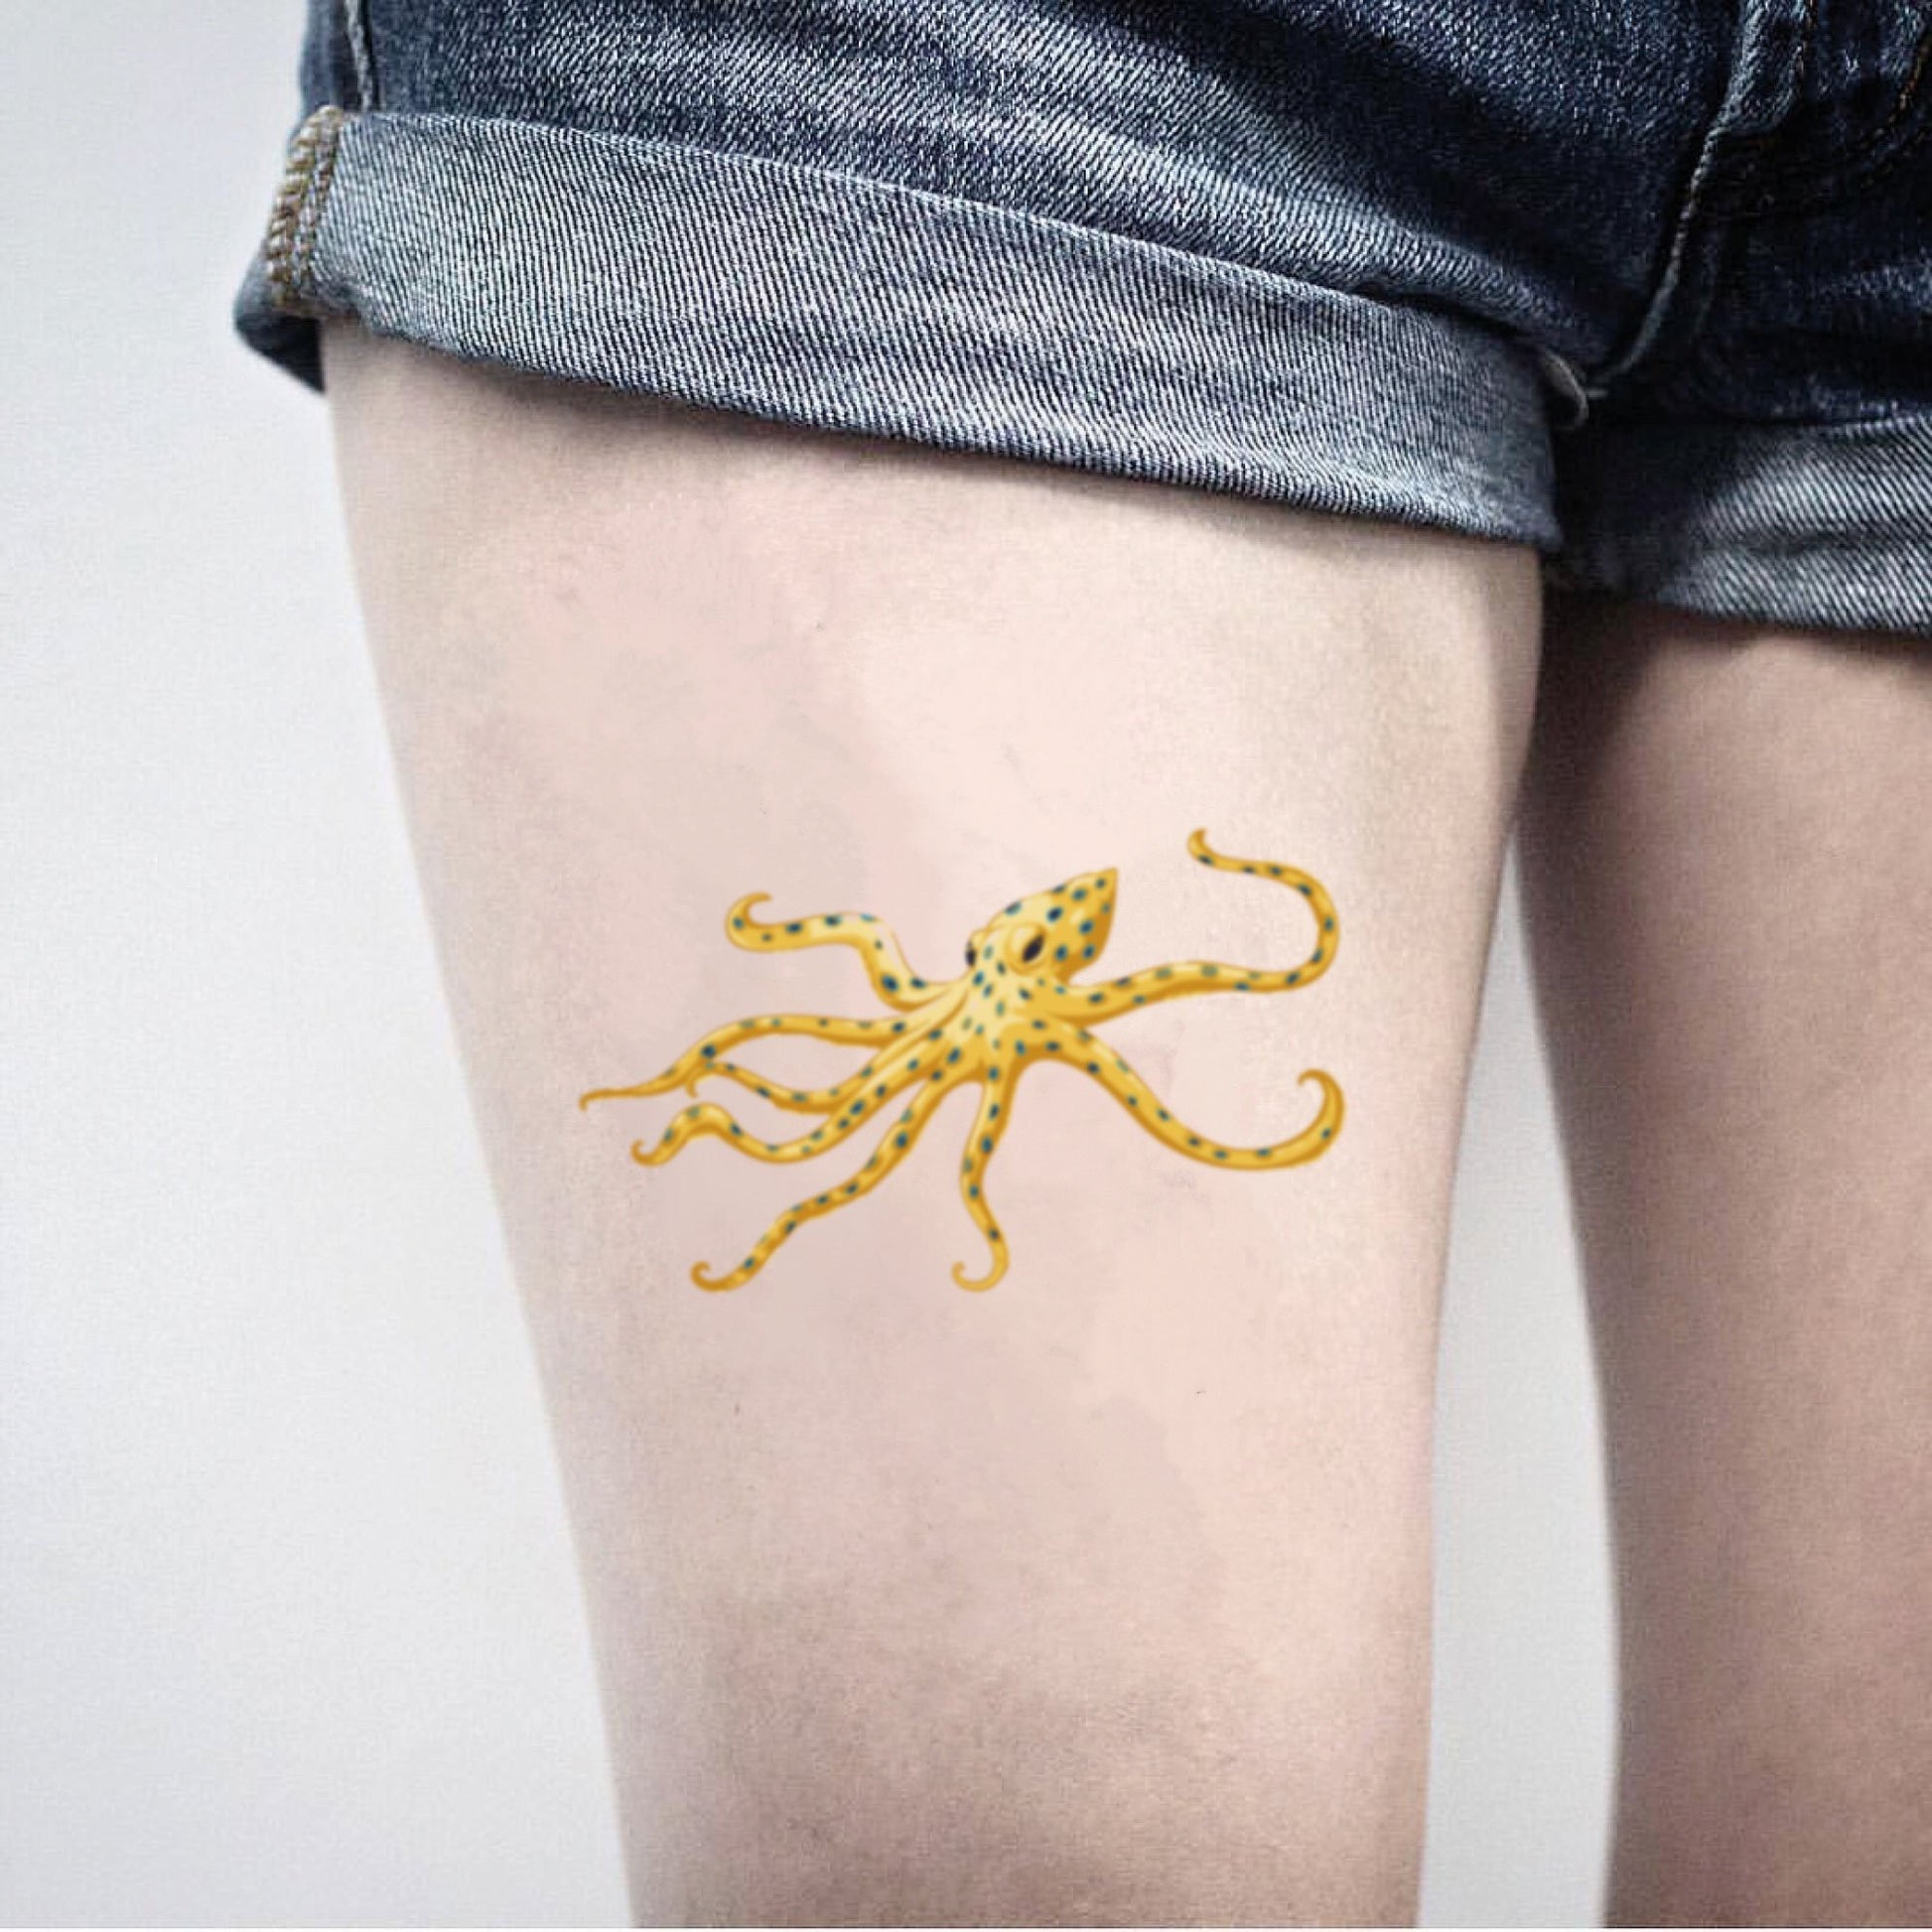 fake big blue ringed octopus animal temporary tattoo sticker design idea on thigh